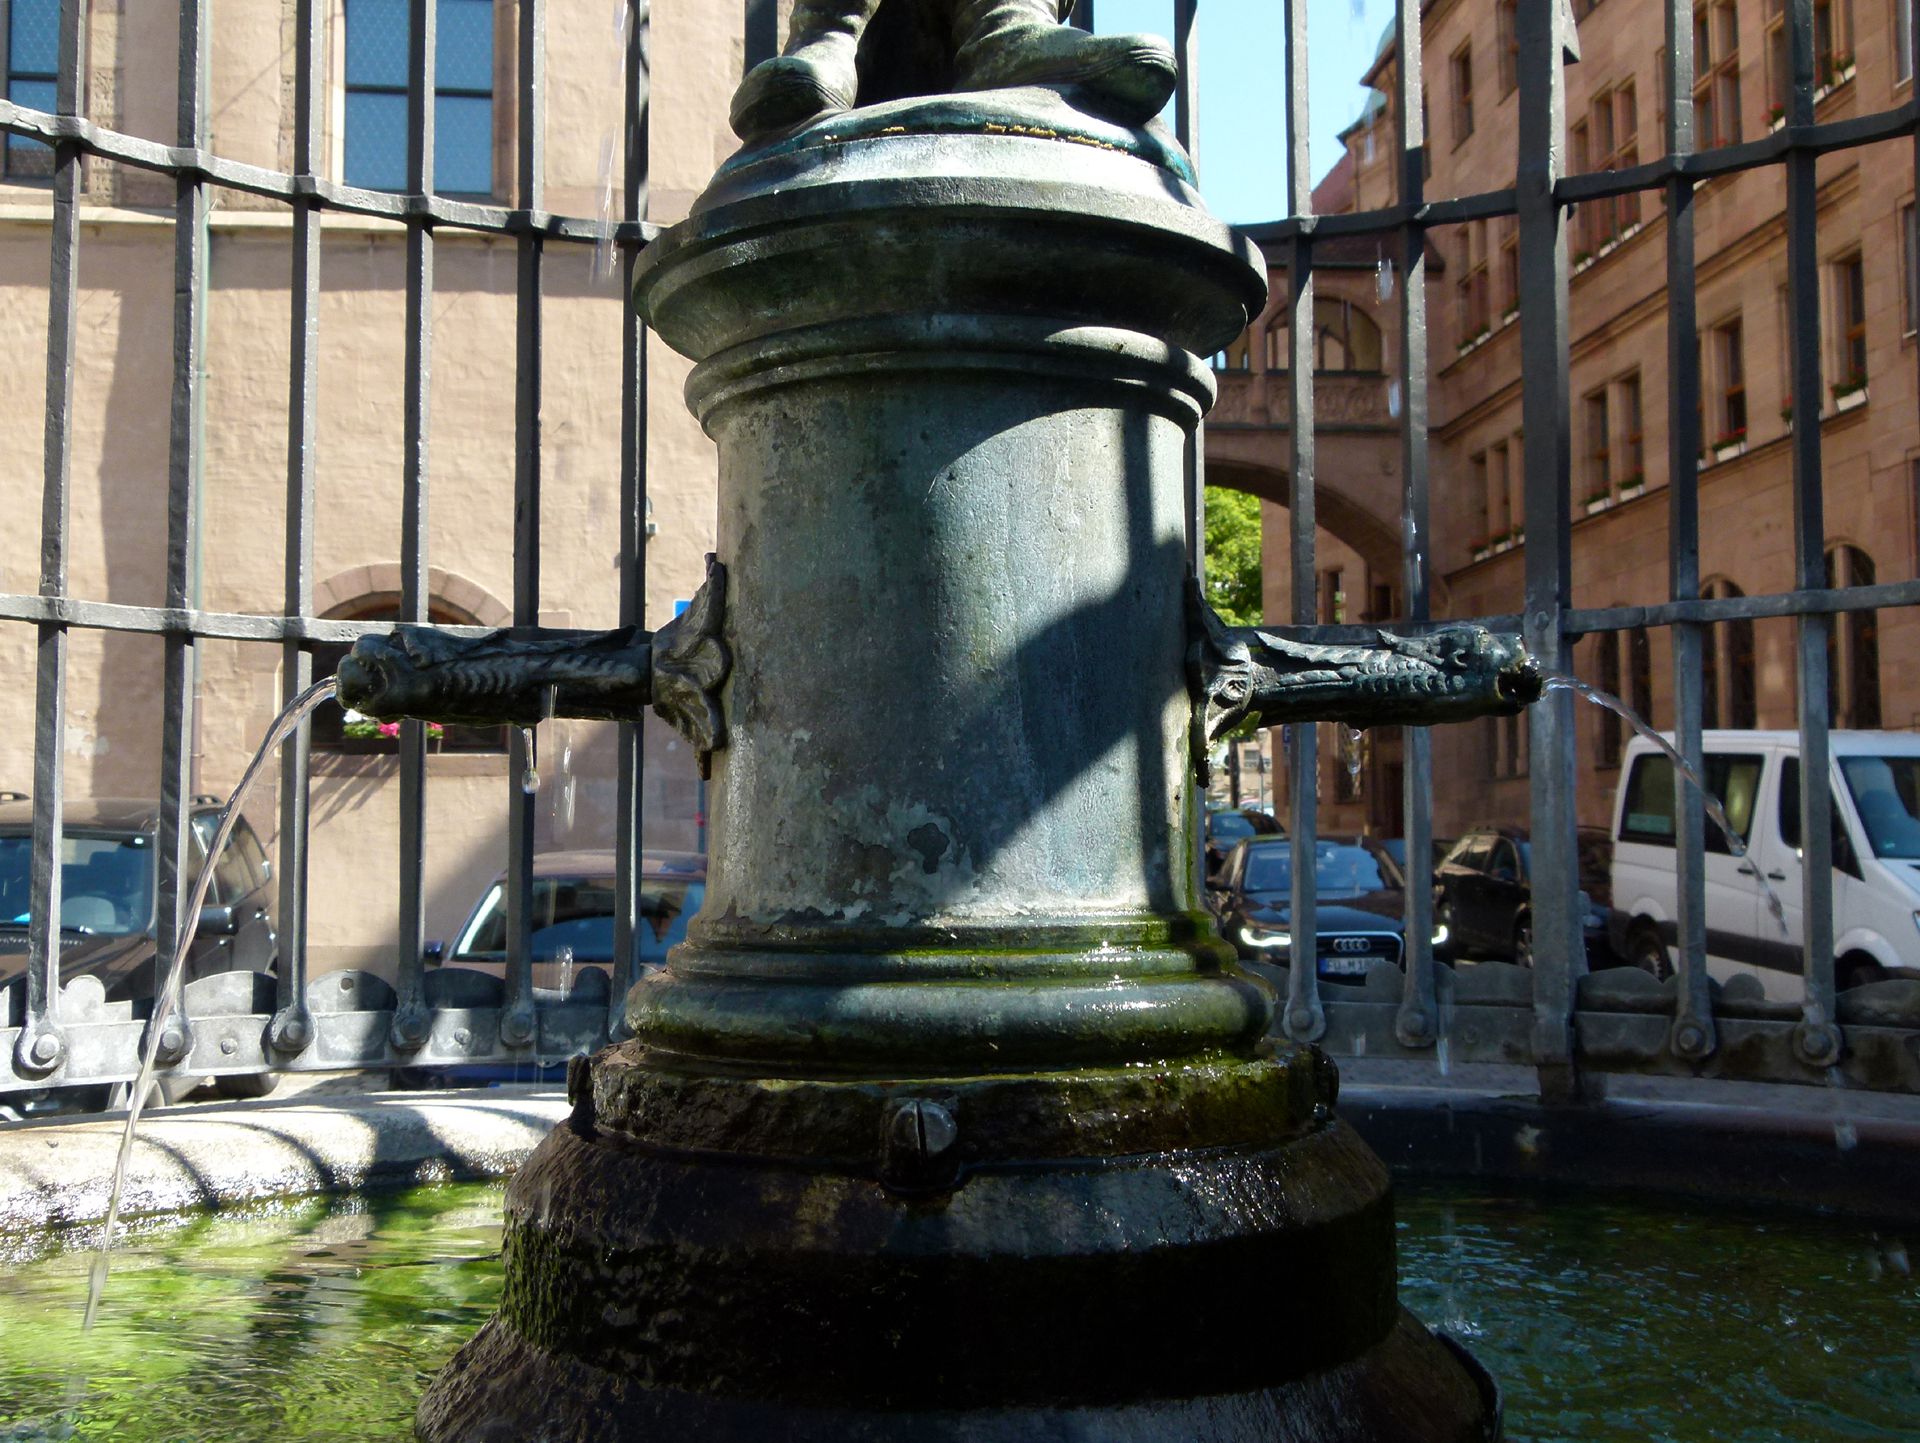 Gänsemännlein-Fountain (Little man with geese-Fountain) Pedestal with gargoyles